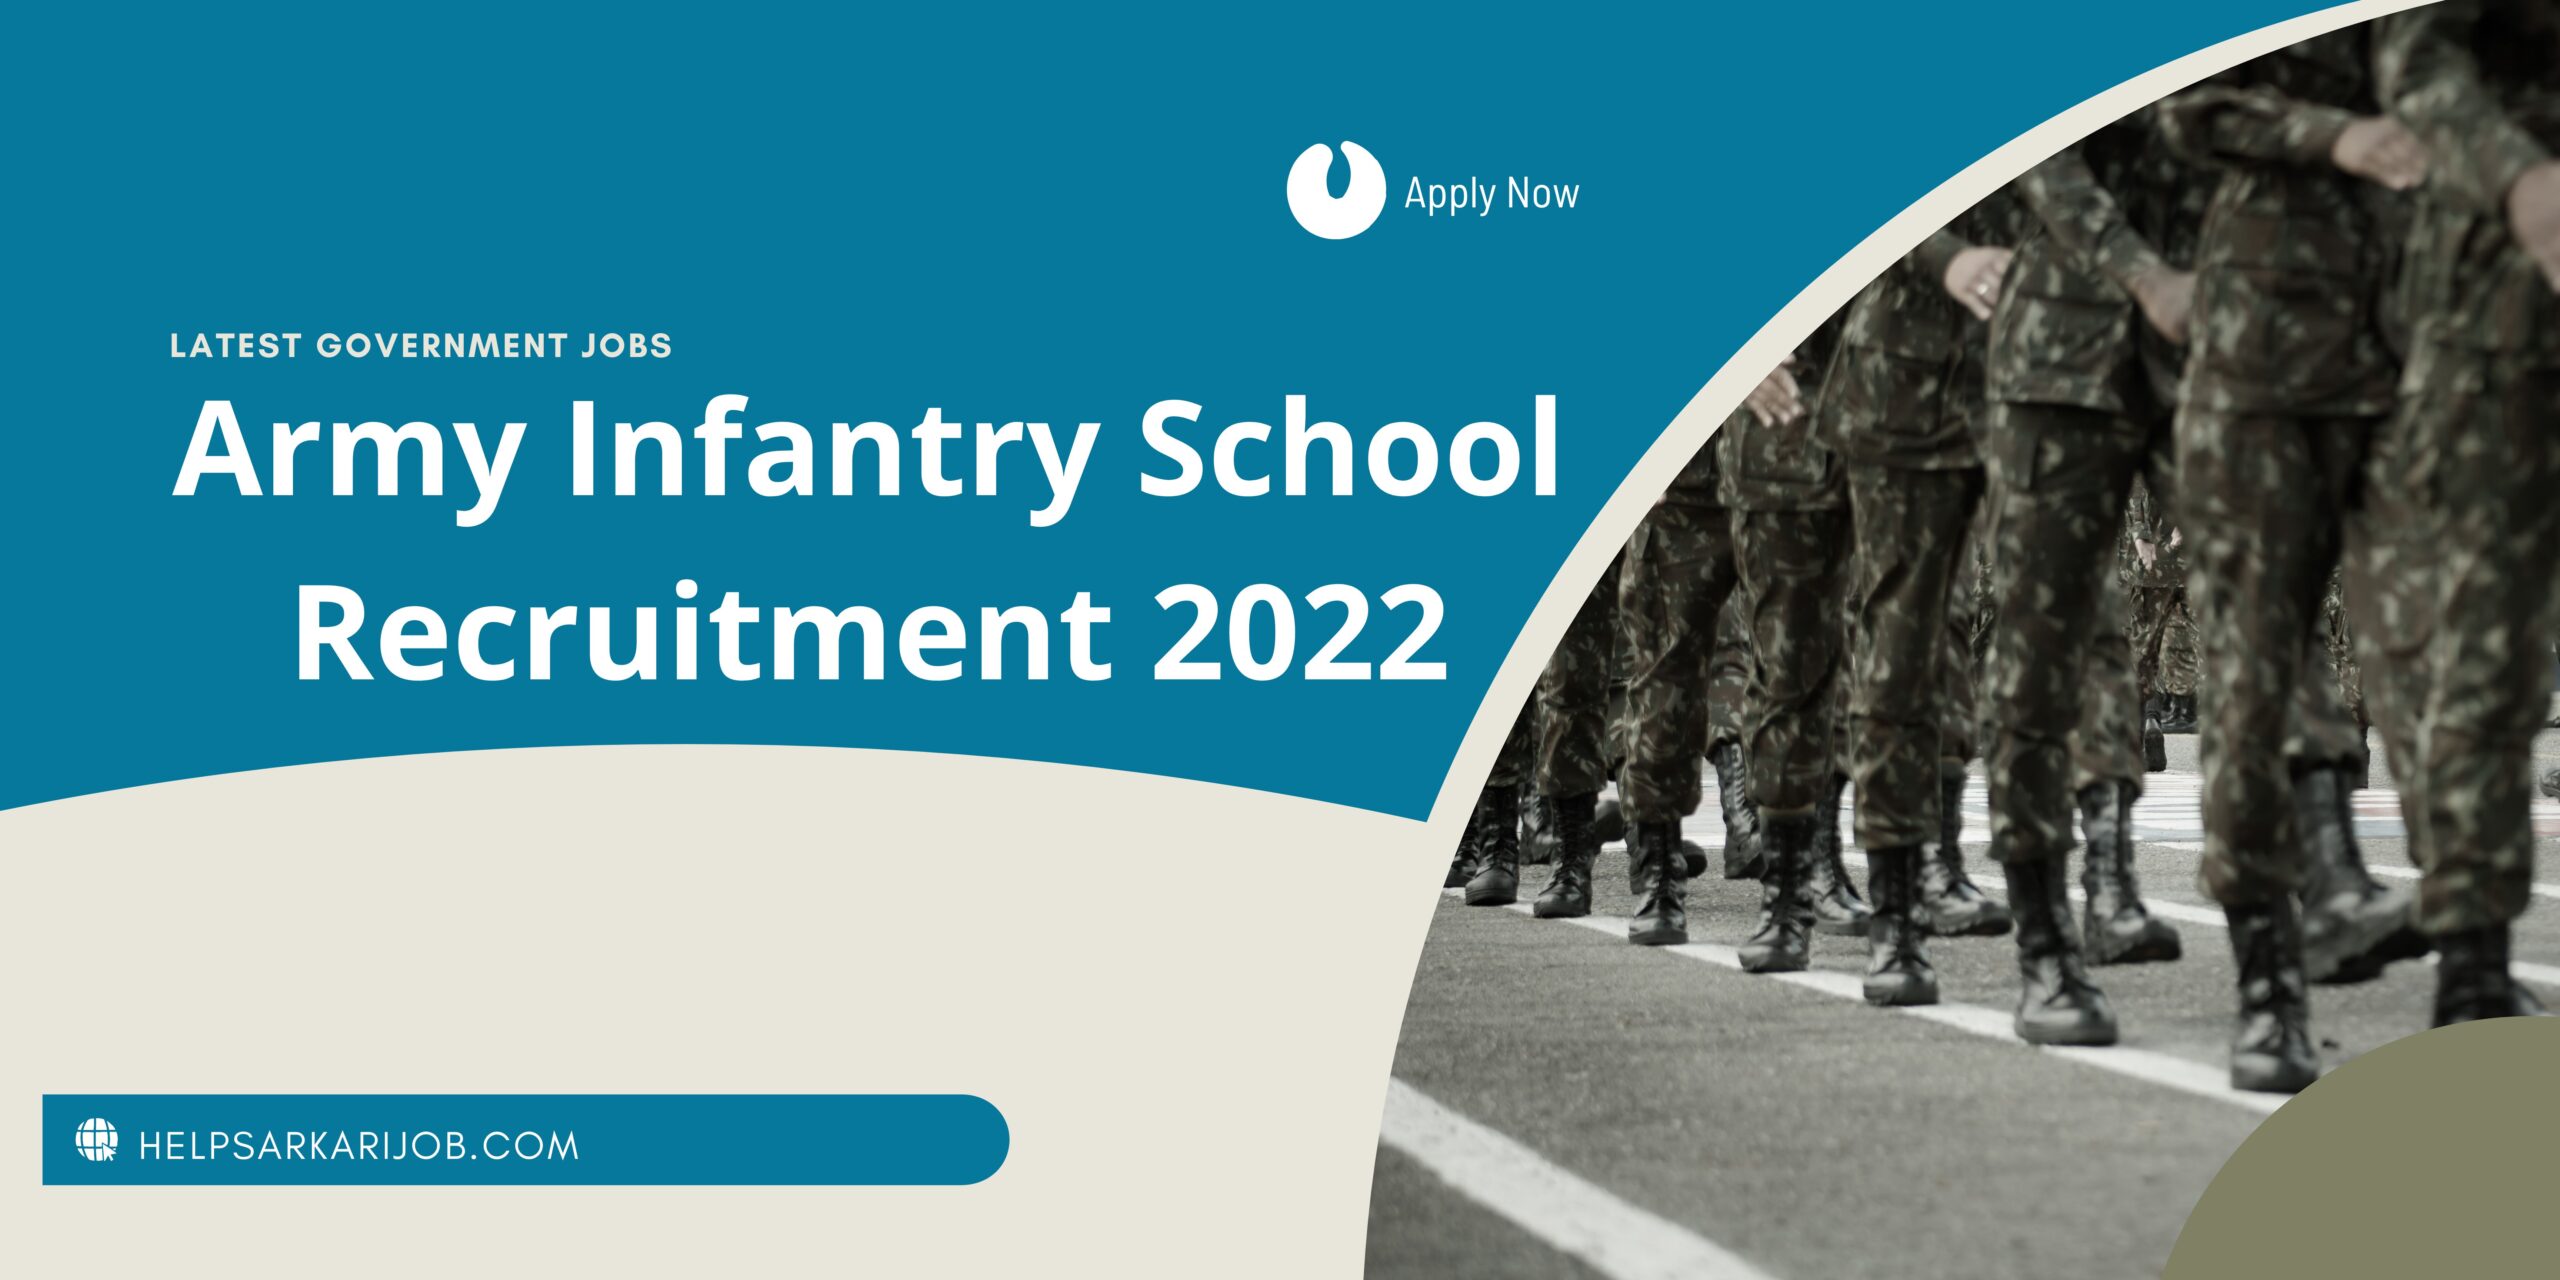 Army Infantry School Recruitment 2022